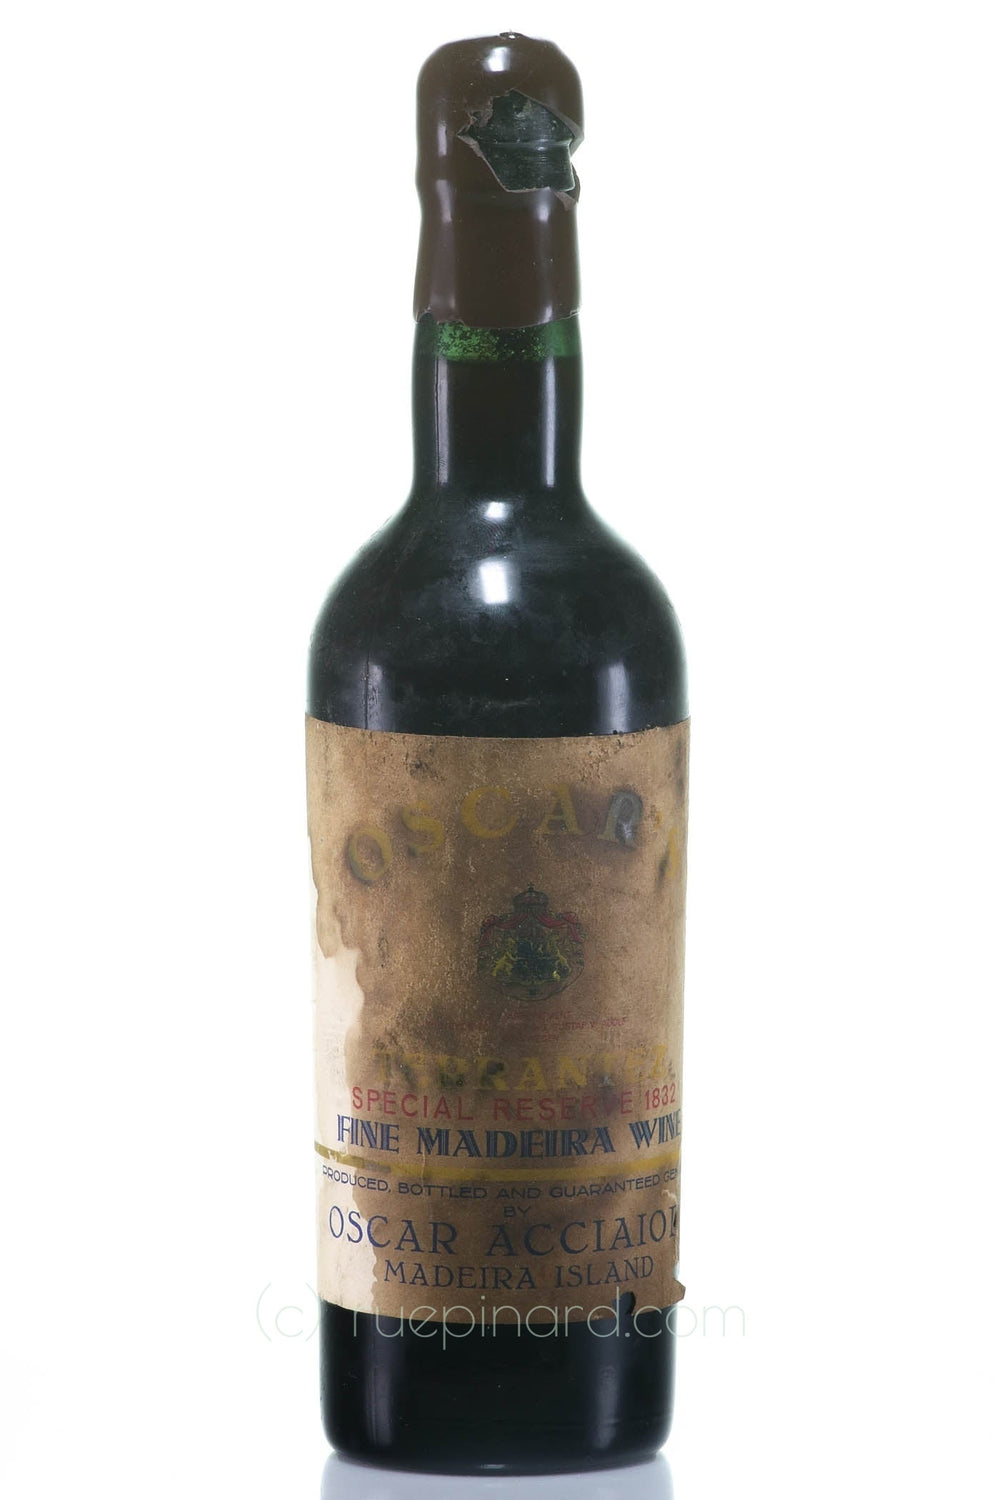 1832 Terrantez Madeira Rare Vintage Reserve, Oscar Acciaioly Recorked 2002 - Rue Pinard